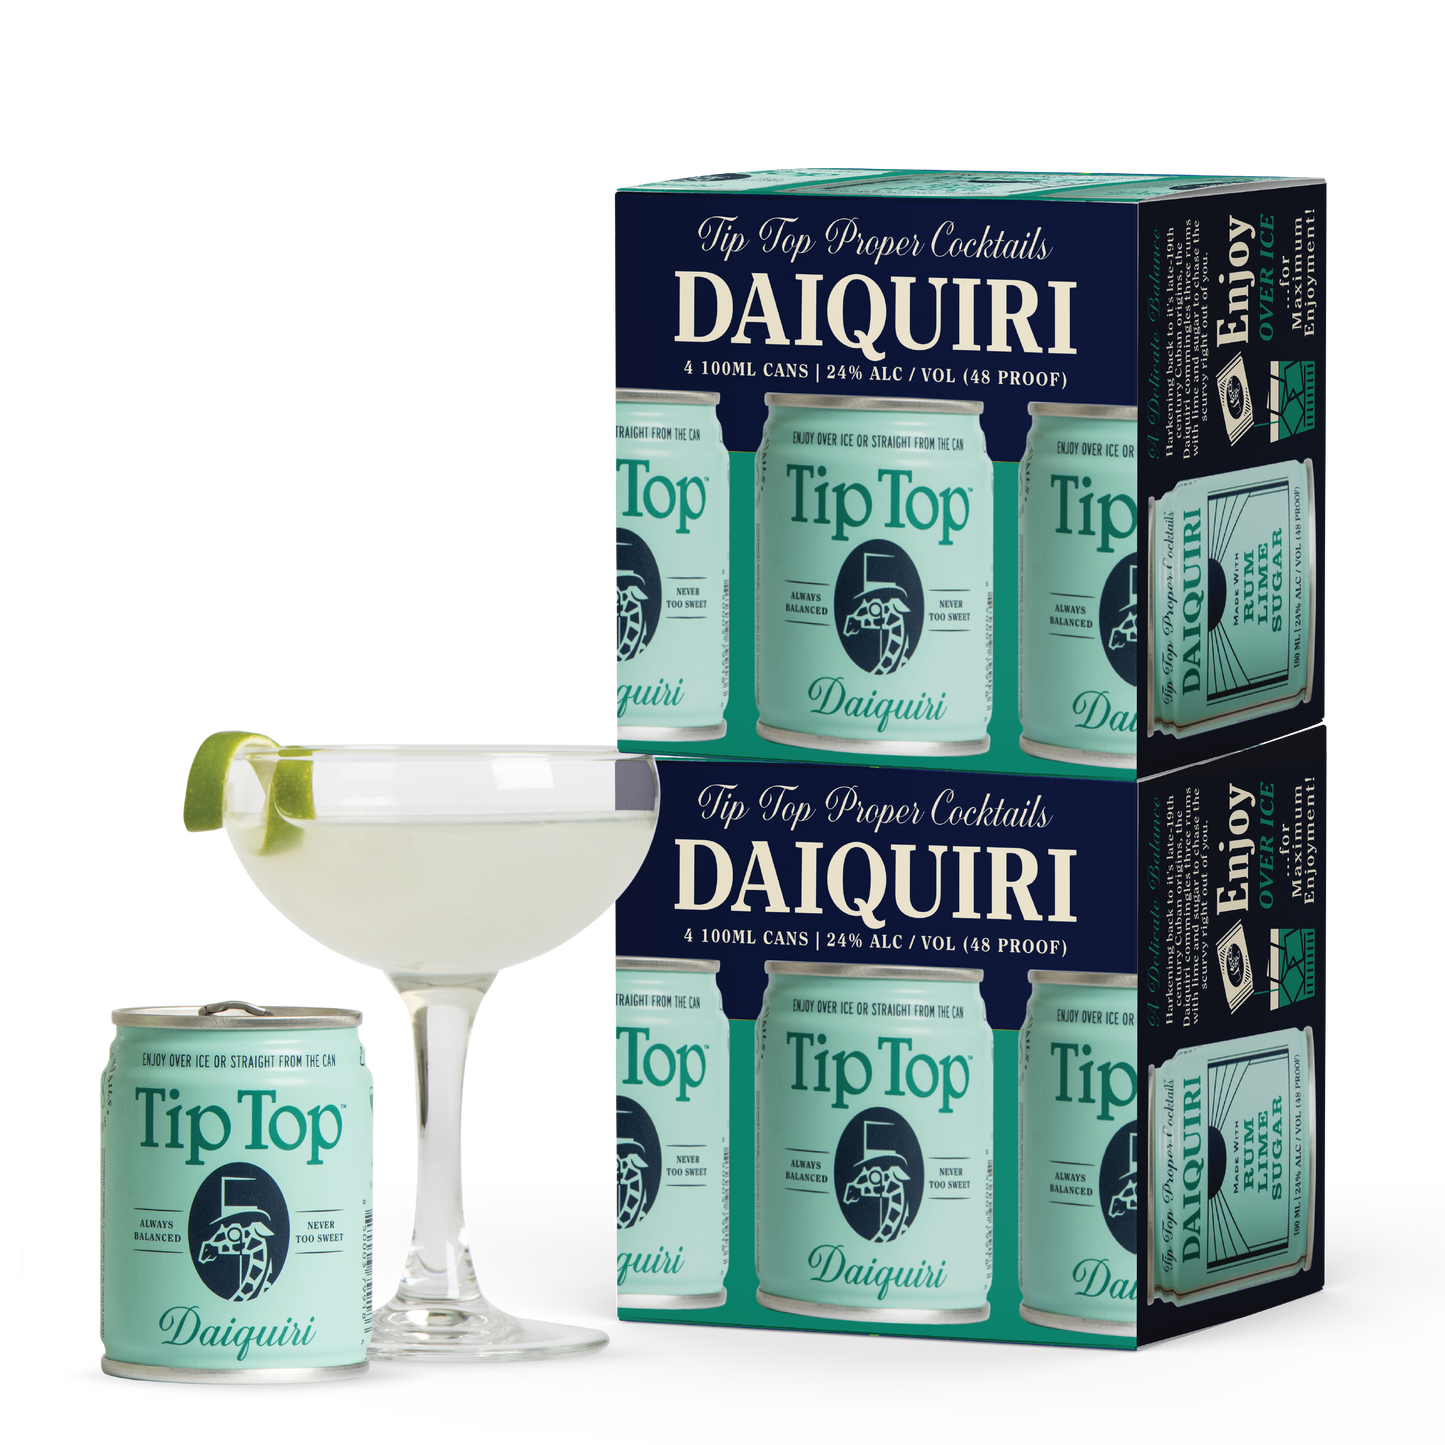 Tip Top Proper Cocktails Daiquiri